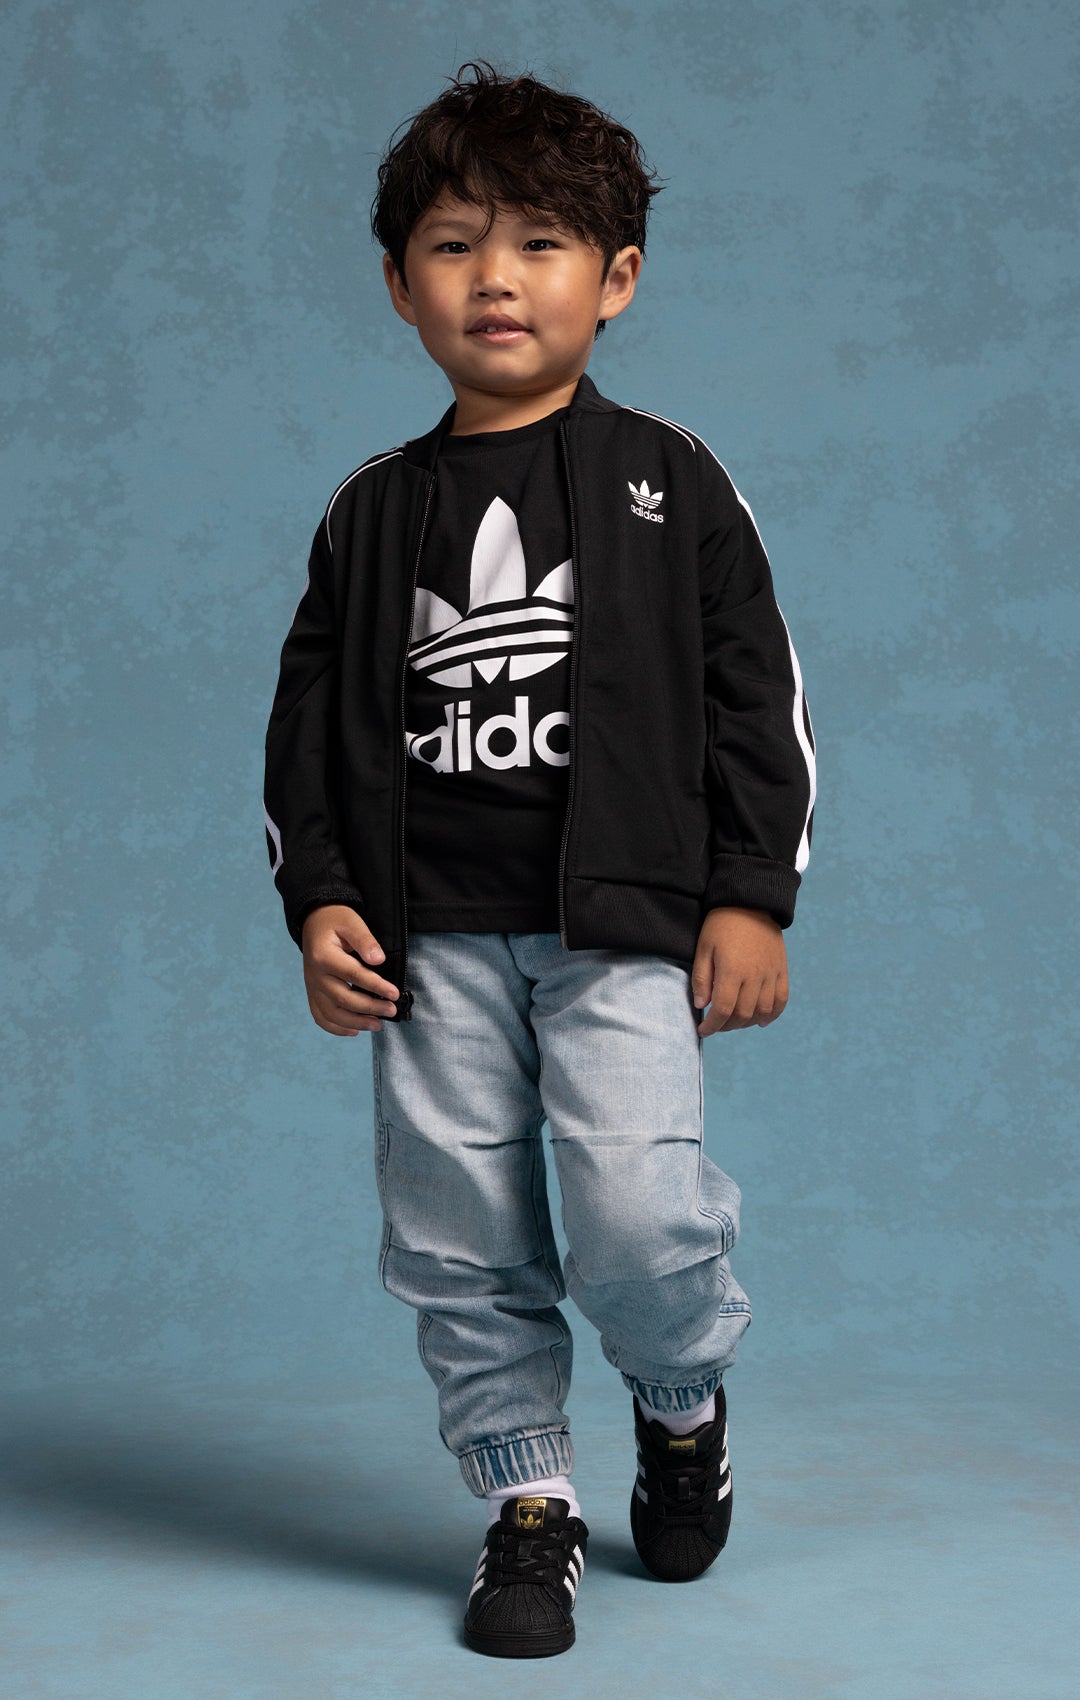 Kids Foot Locker on X: Just too clean. 👌 The White/Black #Nike